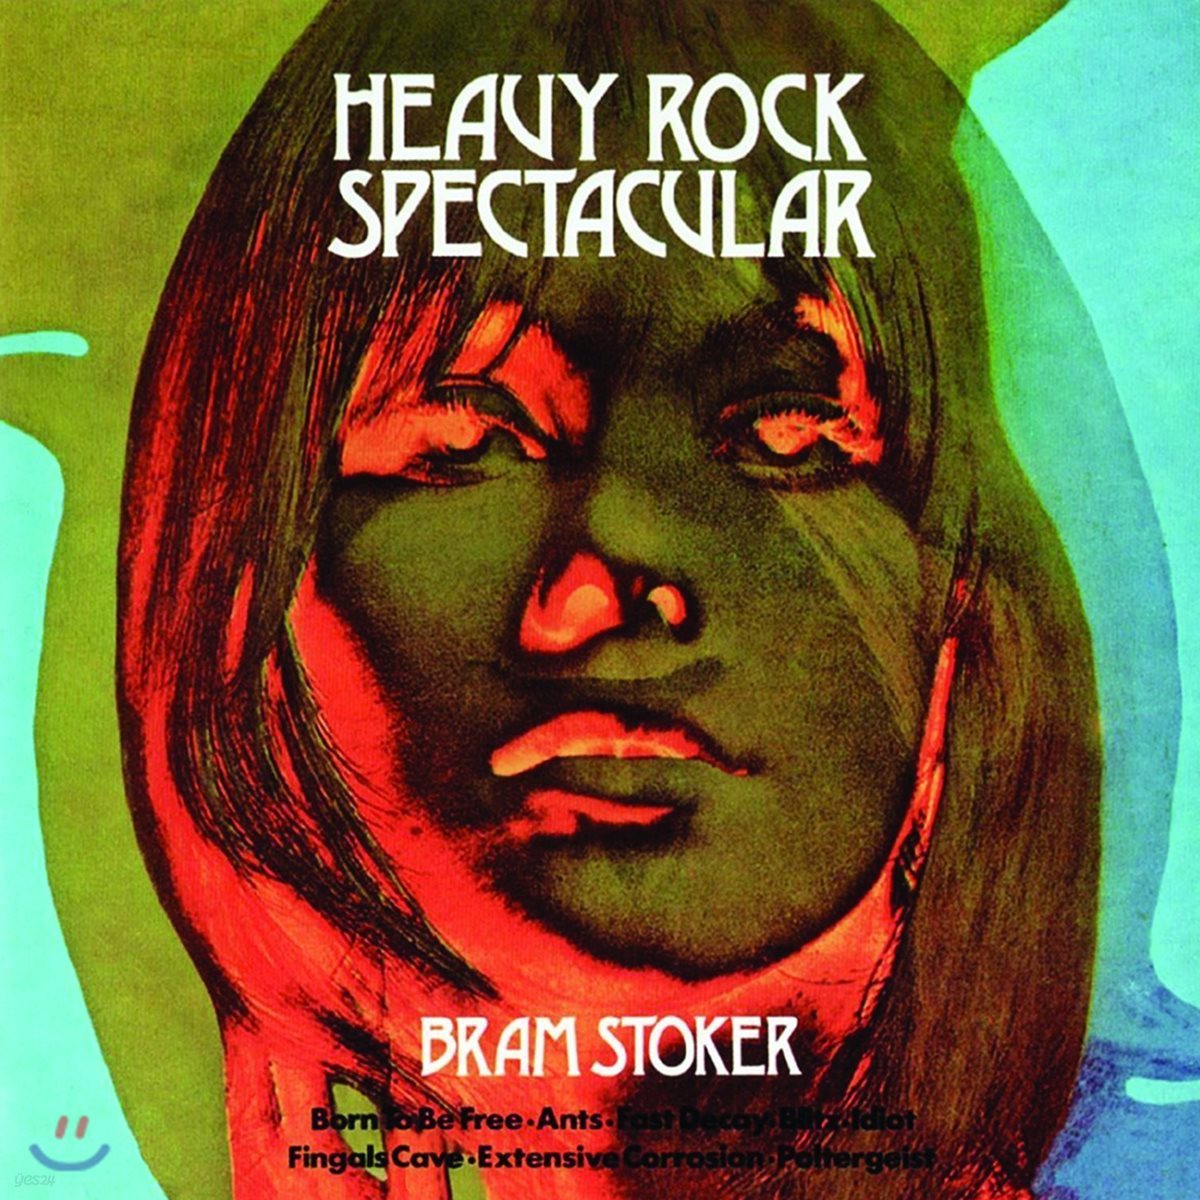 Bram Stoker (브램 스토커) - Heavy Rock Spectacular [LP]